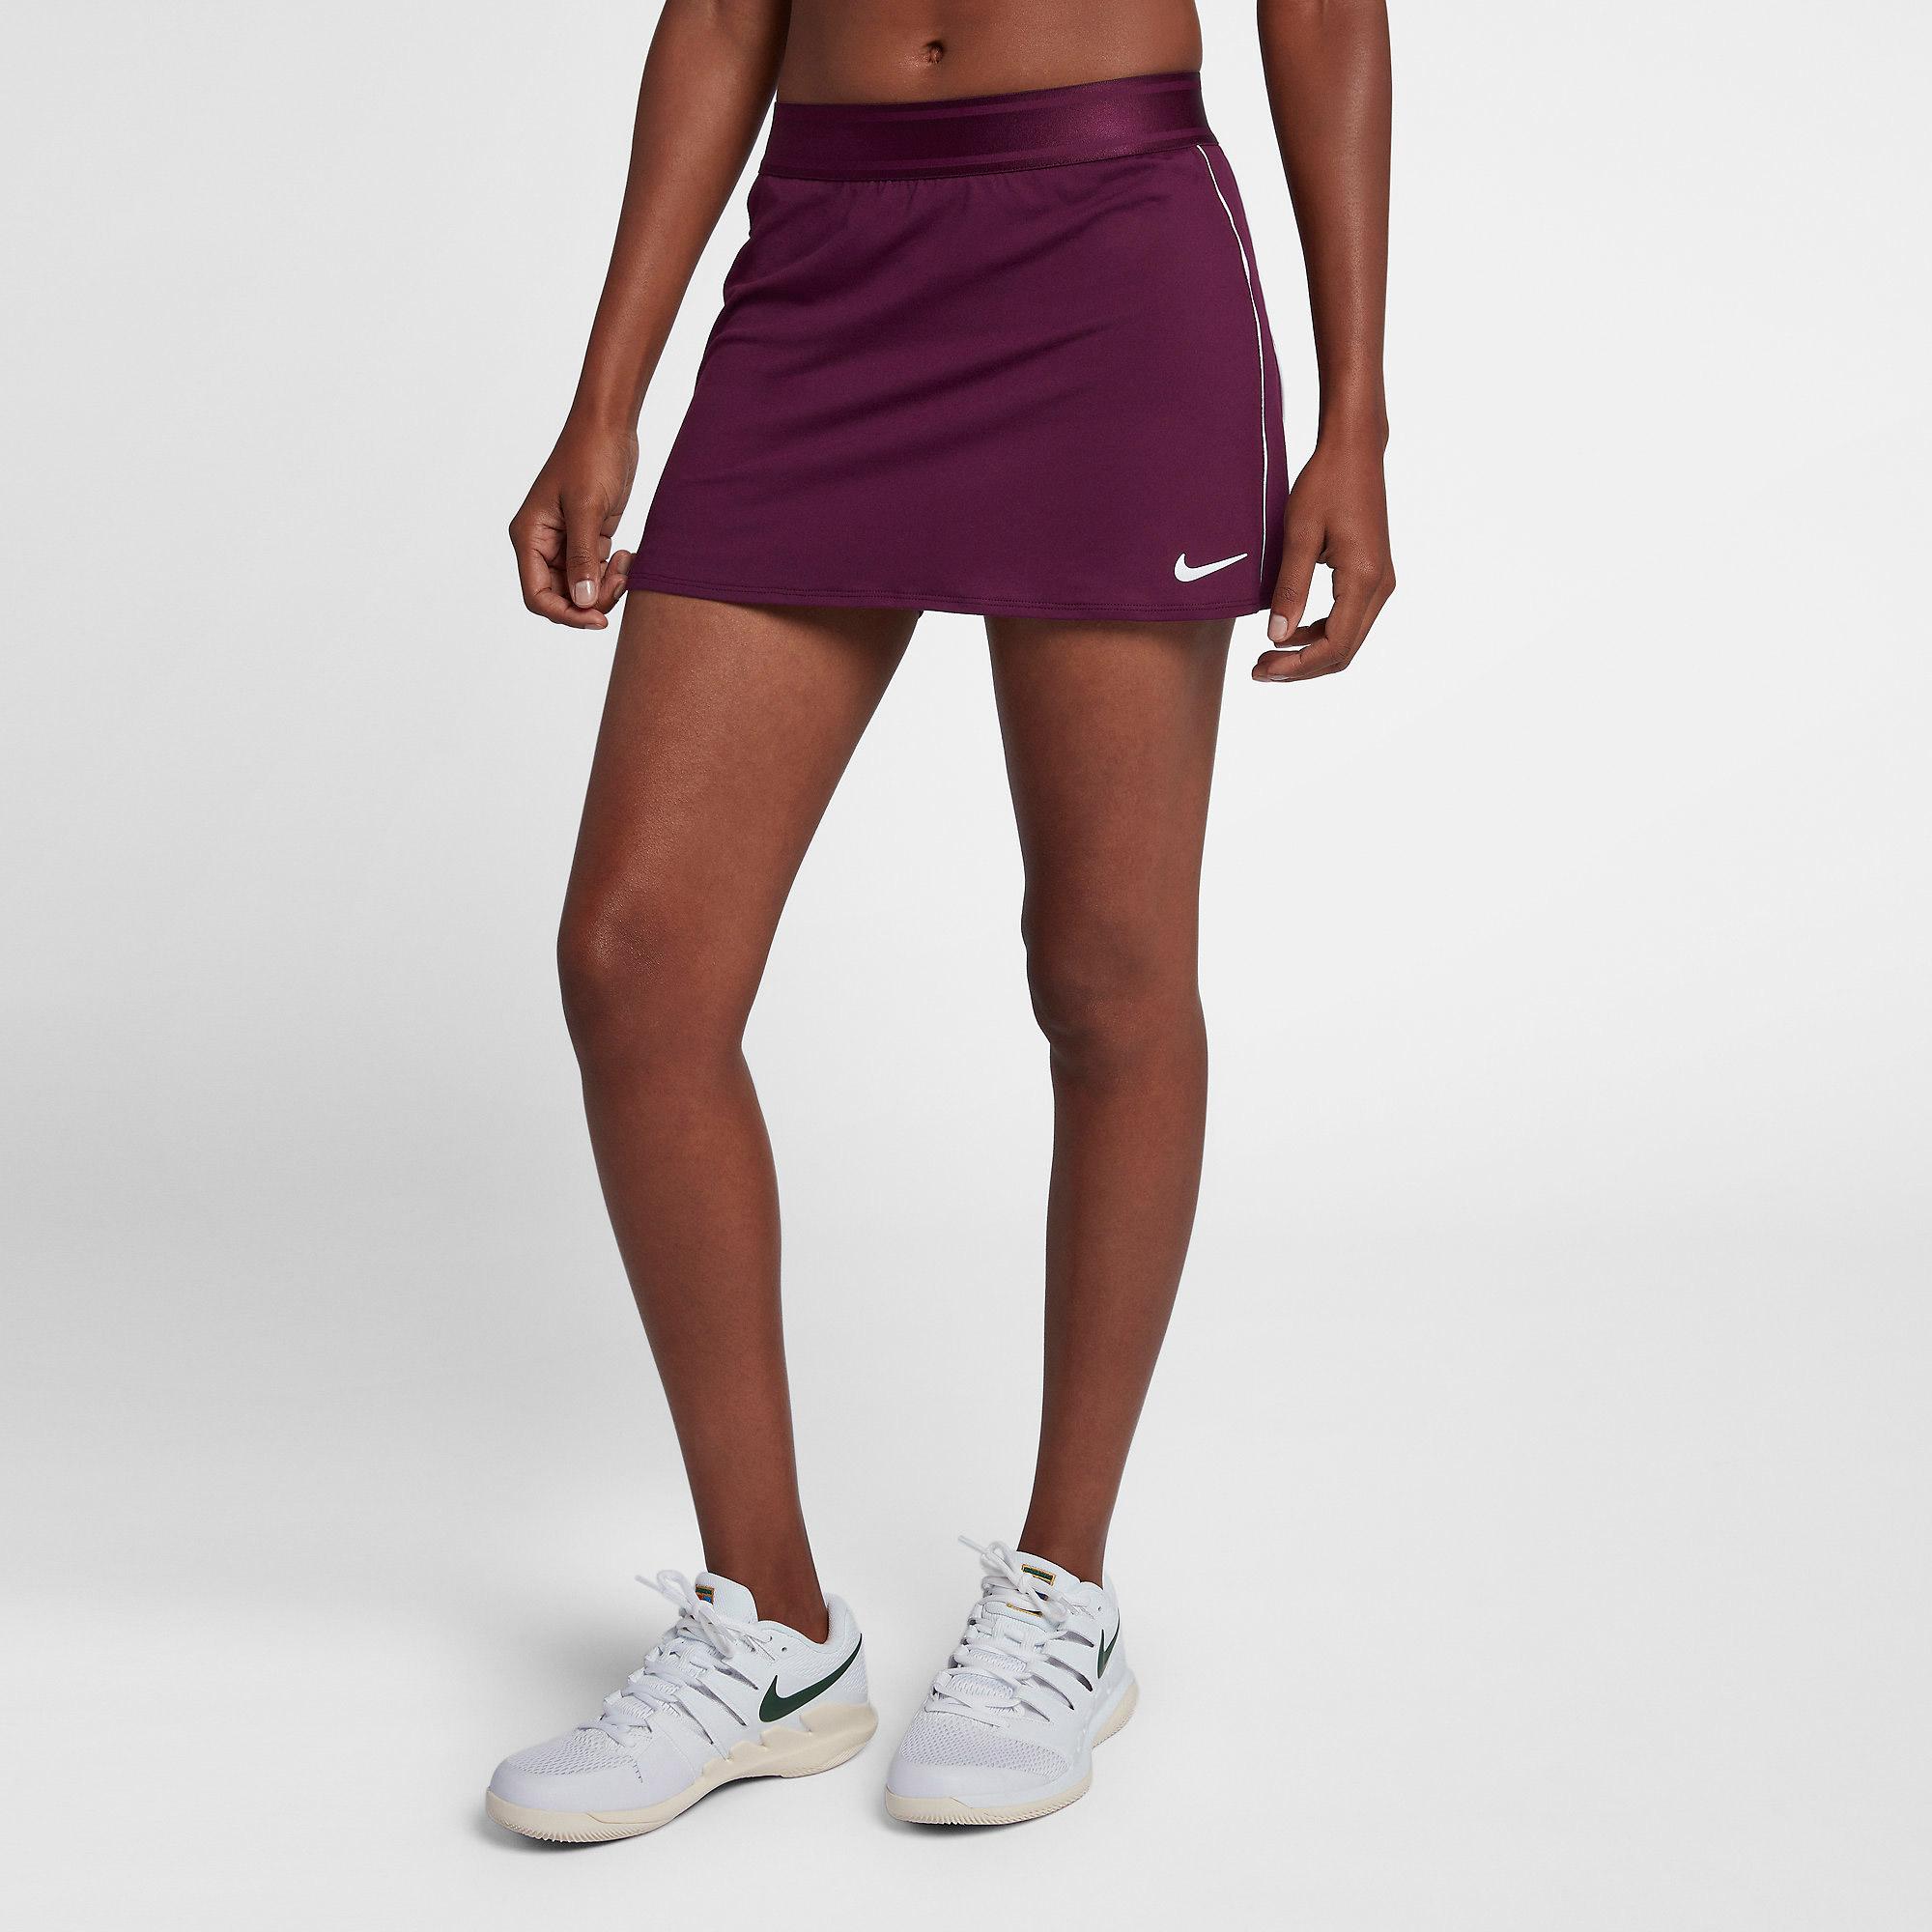 Nike Womens Dry Tennis Skort - Bordeaux/White - Tennisnuts.com